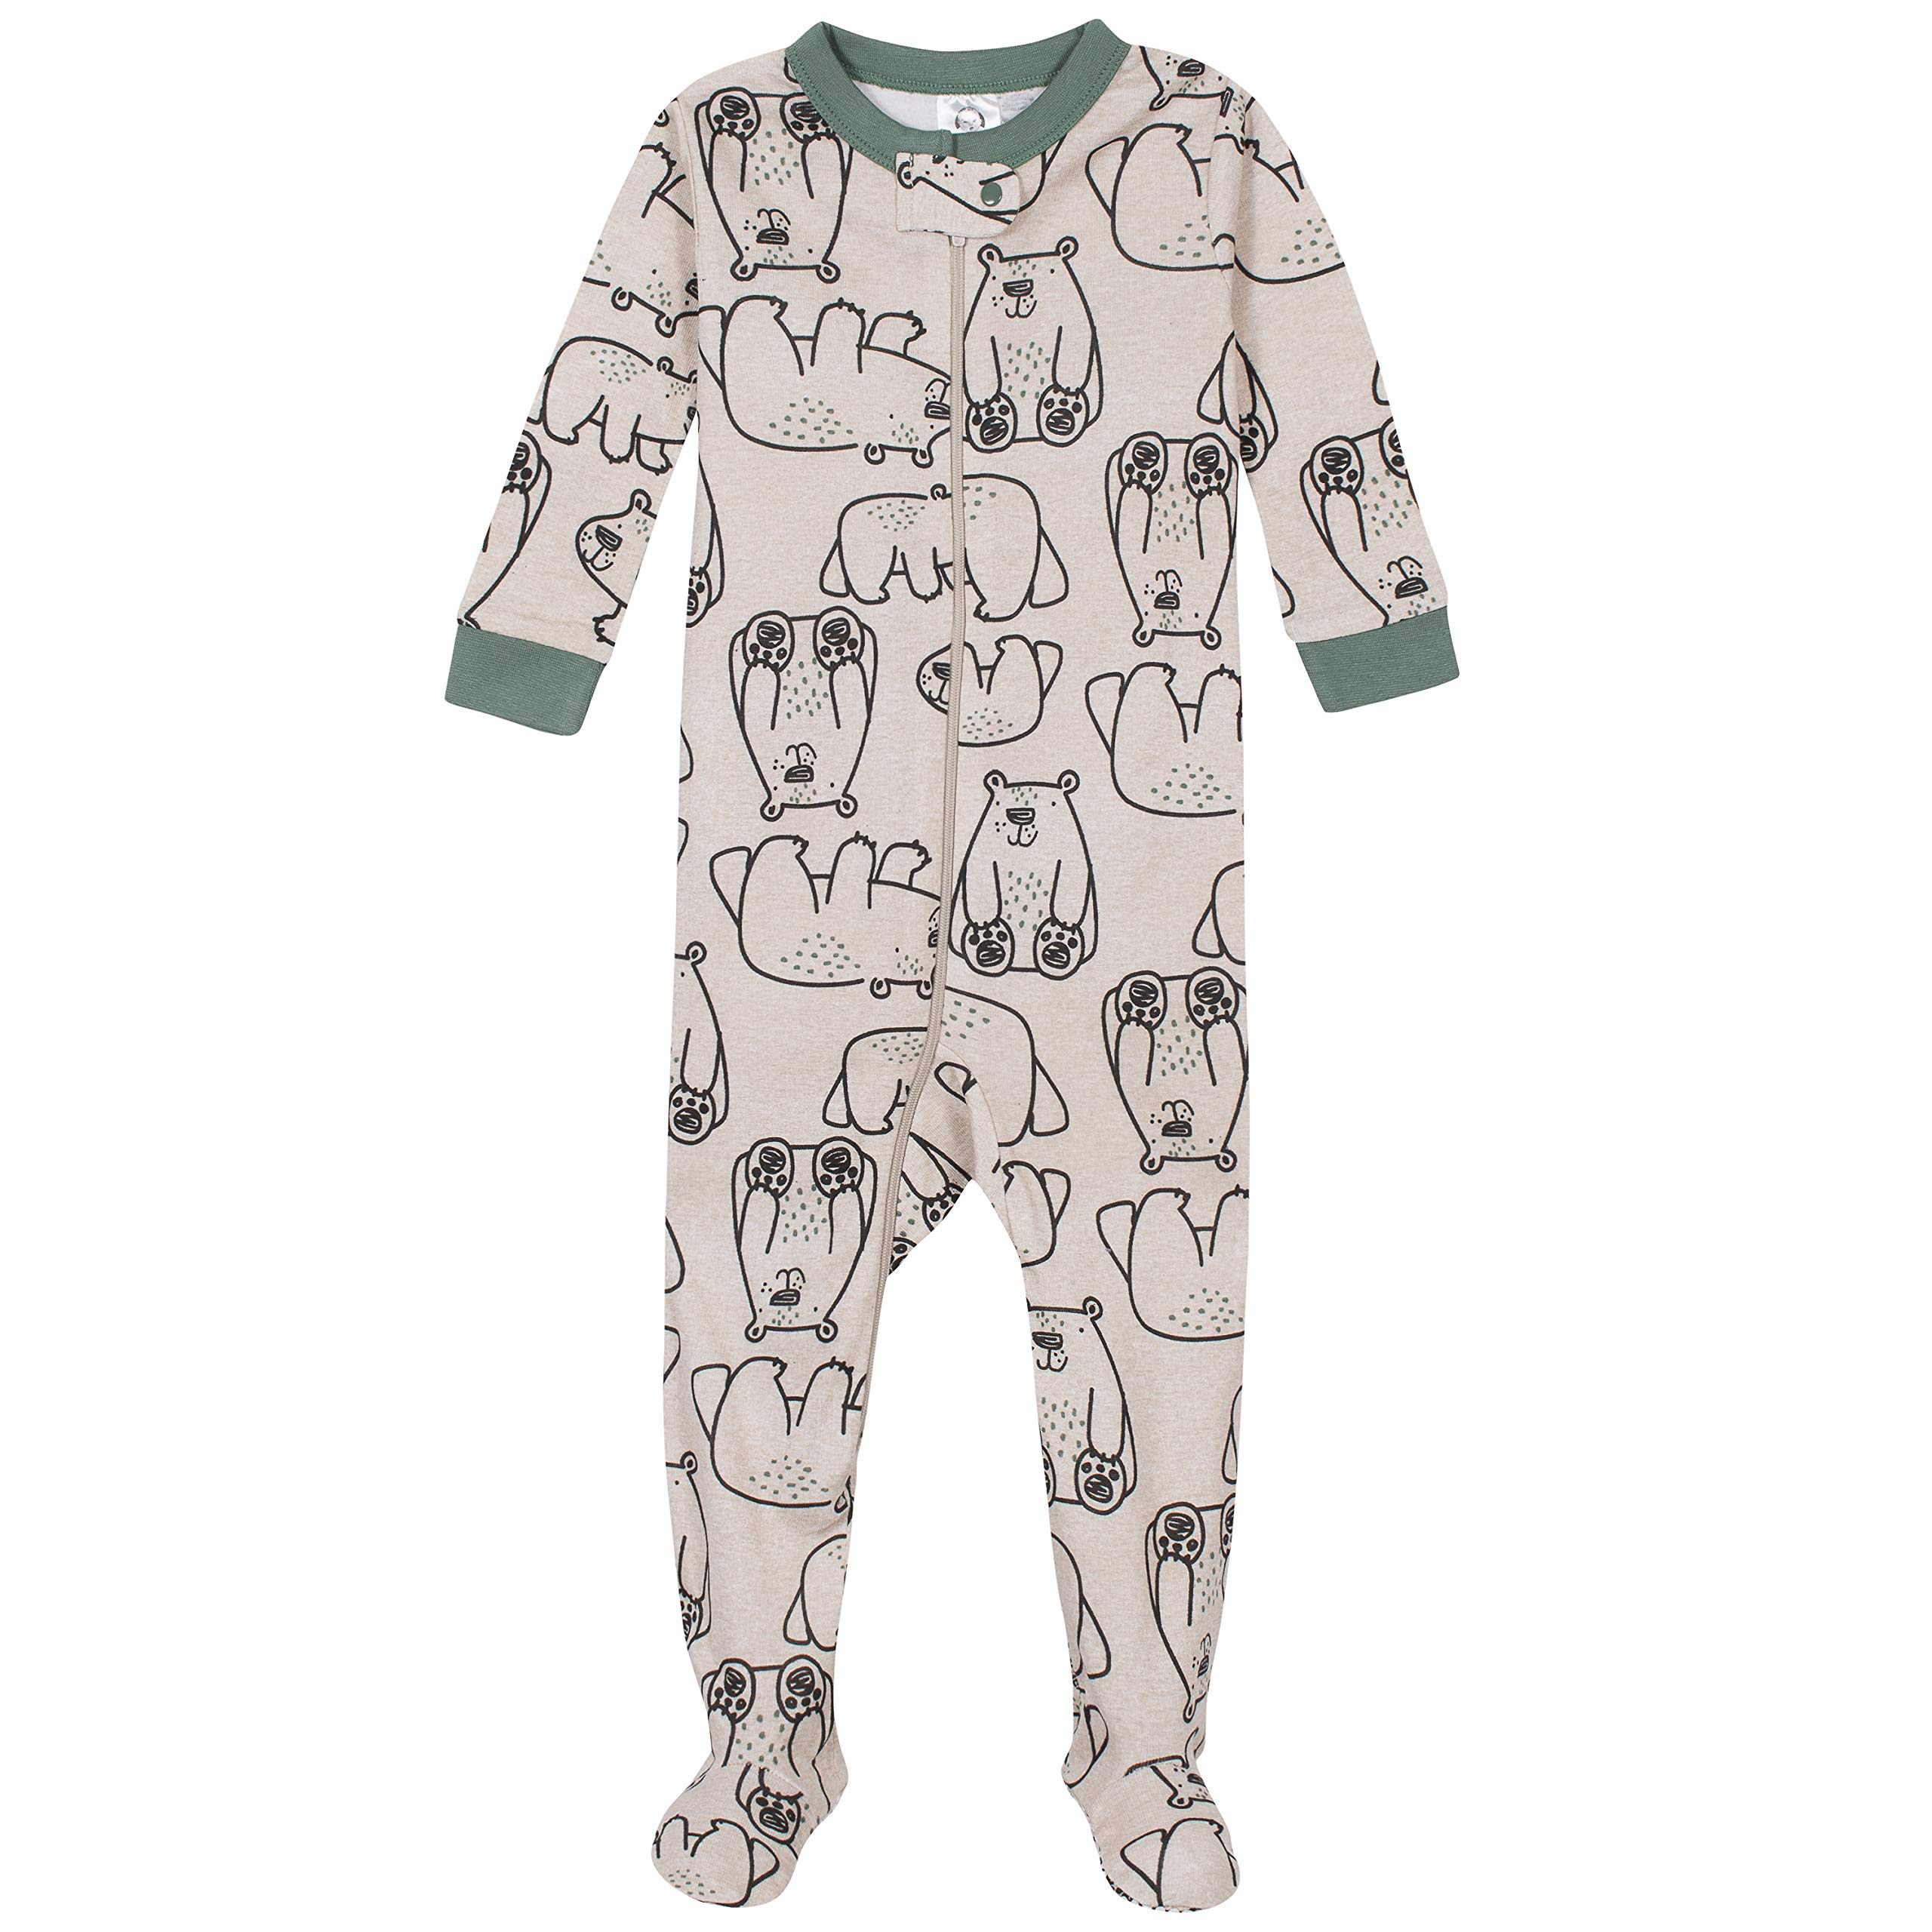 Gerber Baby Boys' 2-Pack Footed Pajamas